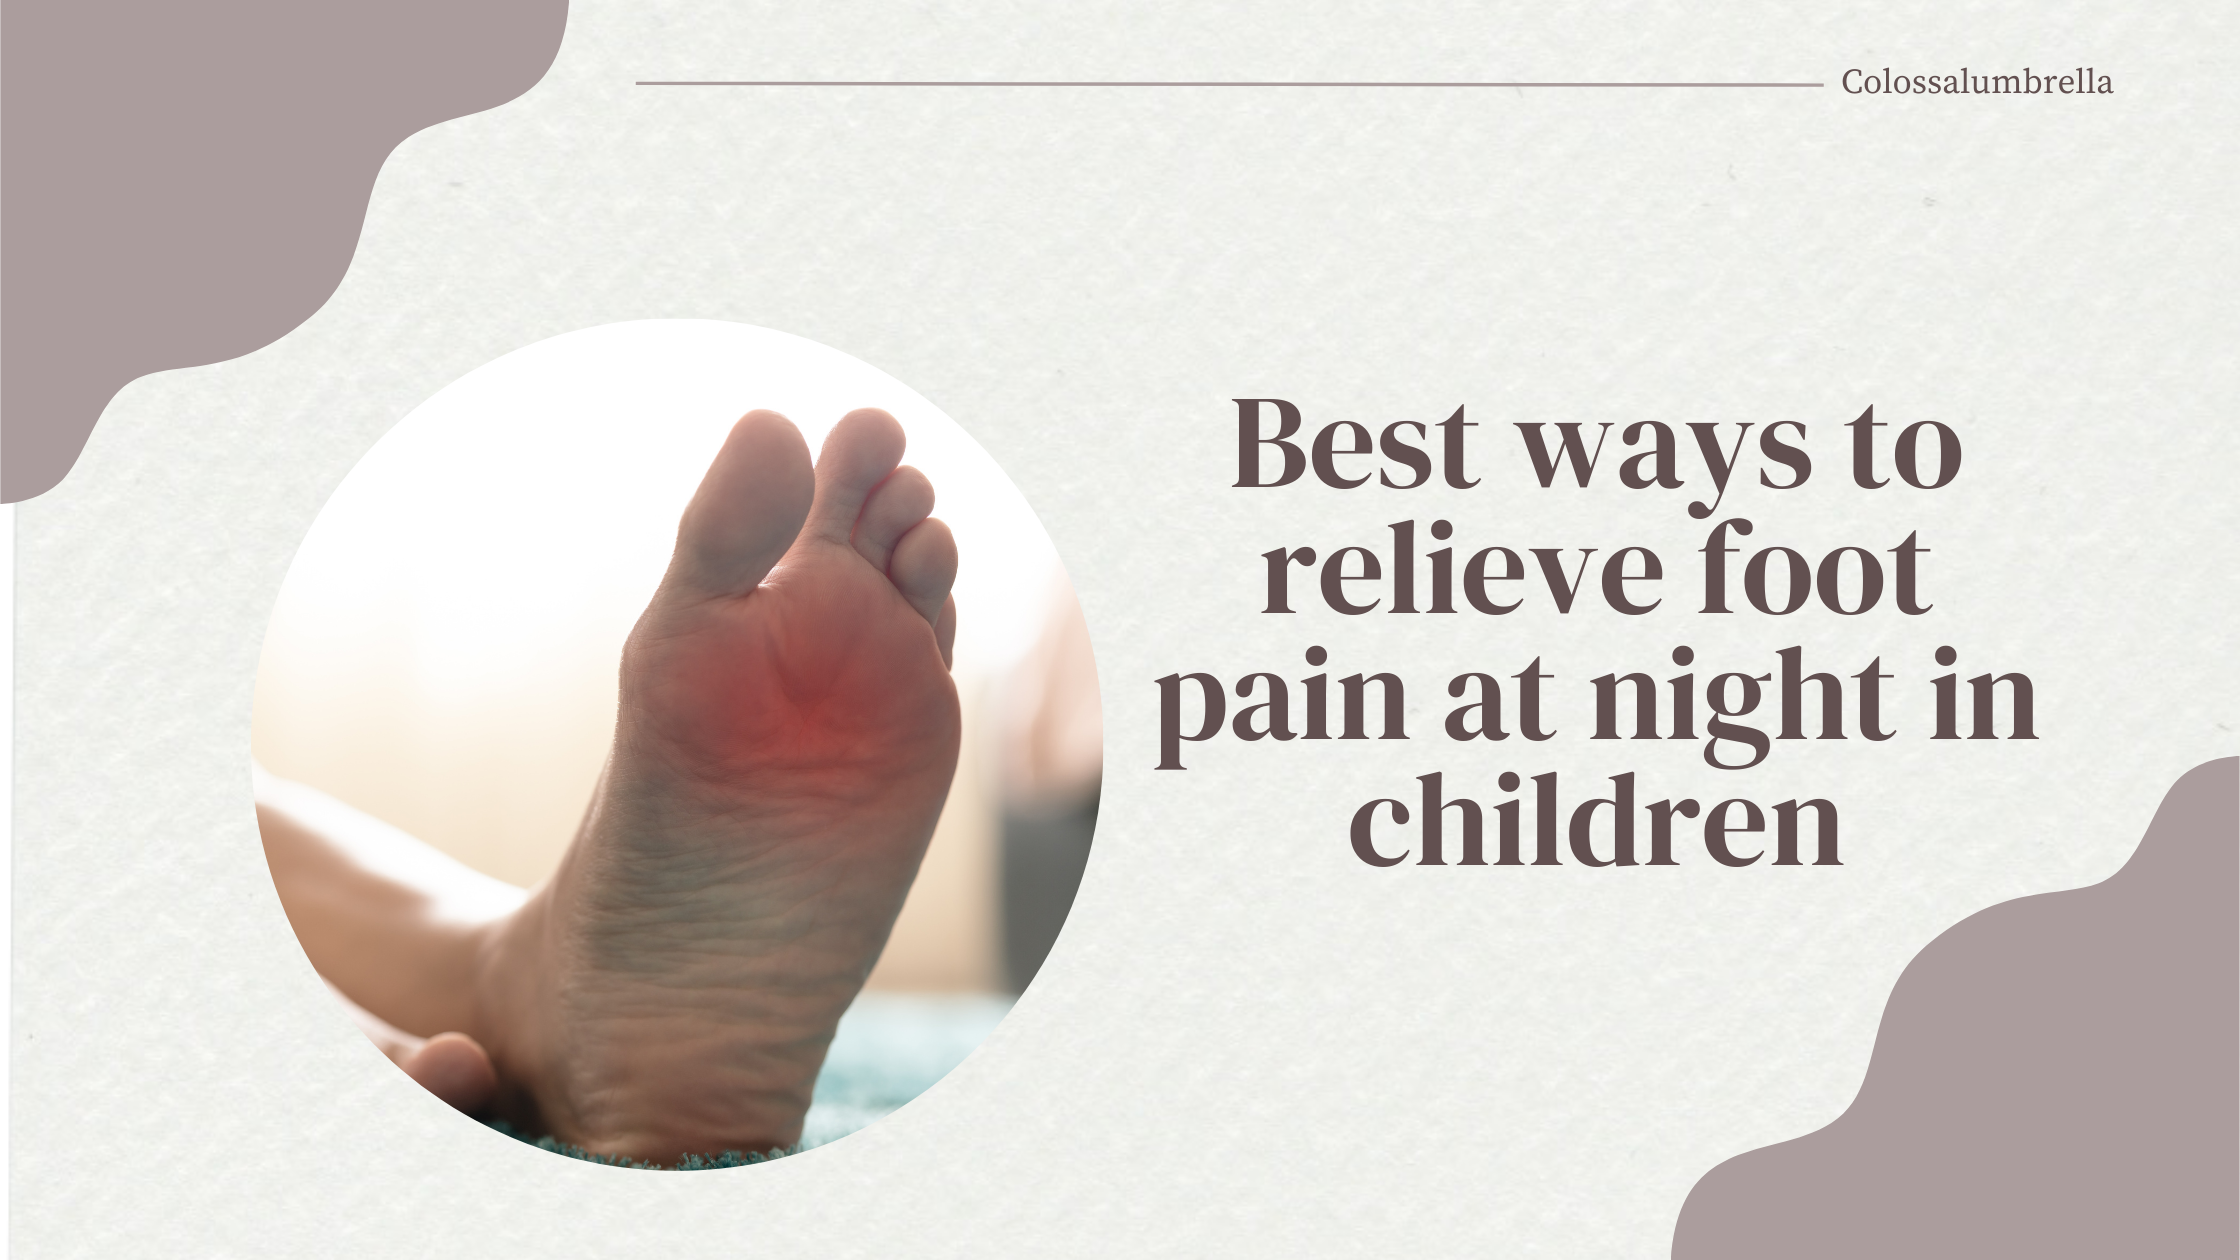 6 Best ways to relieve foot pain at night in children